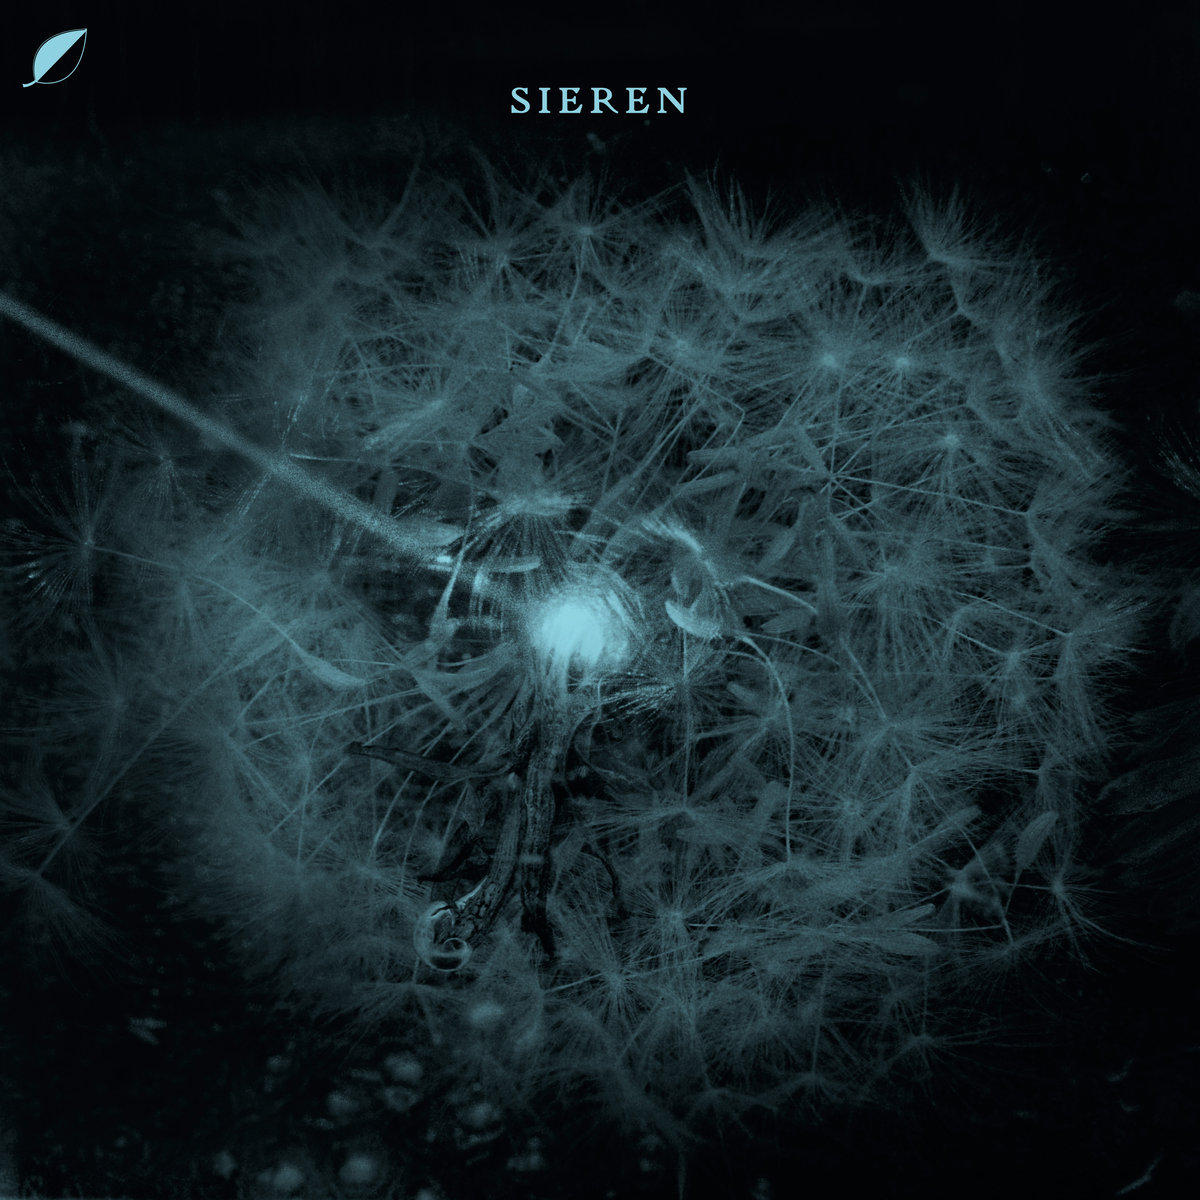 Sieren – Transients of Light